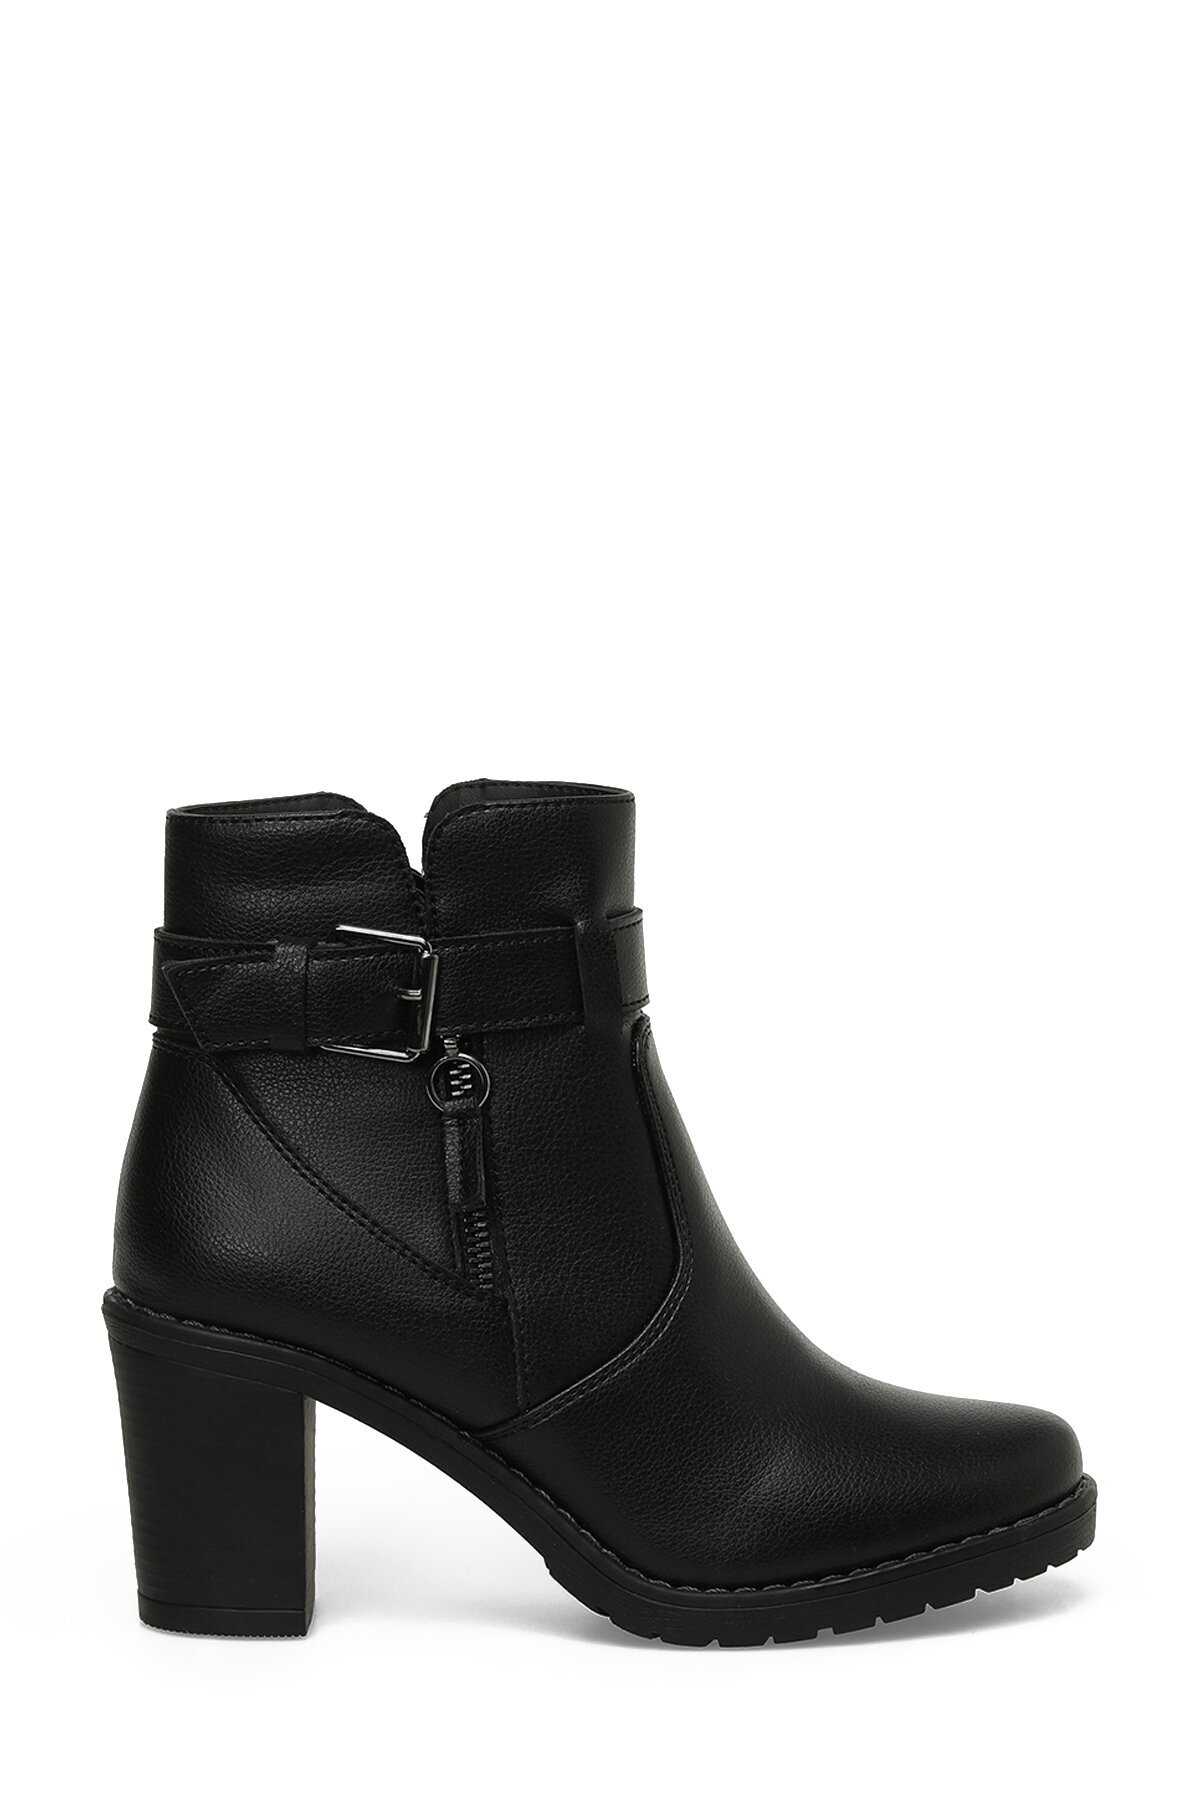 Levně Polaris 318259.Z 3PR Women's Black Heeled Boots